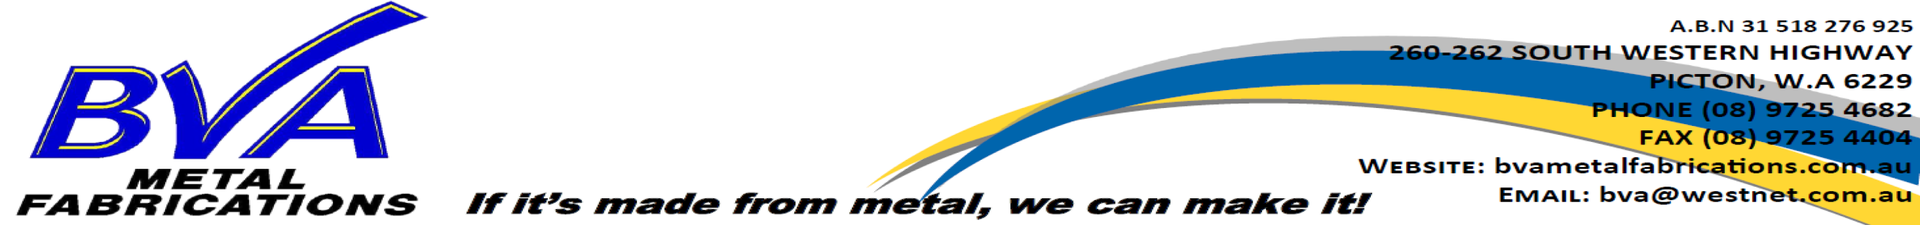 BVA metal fabrication logo